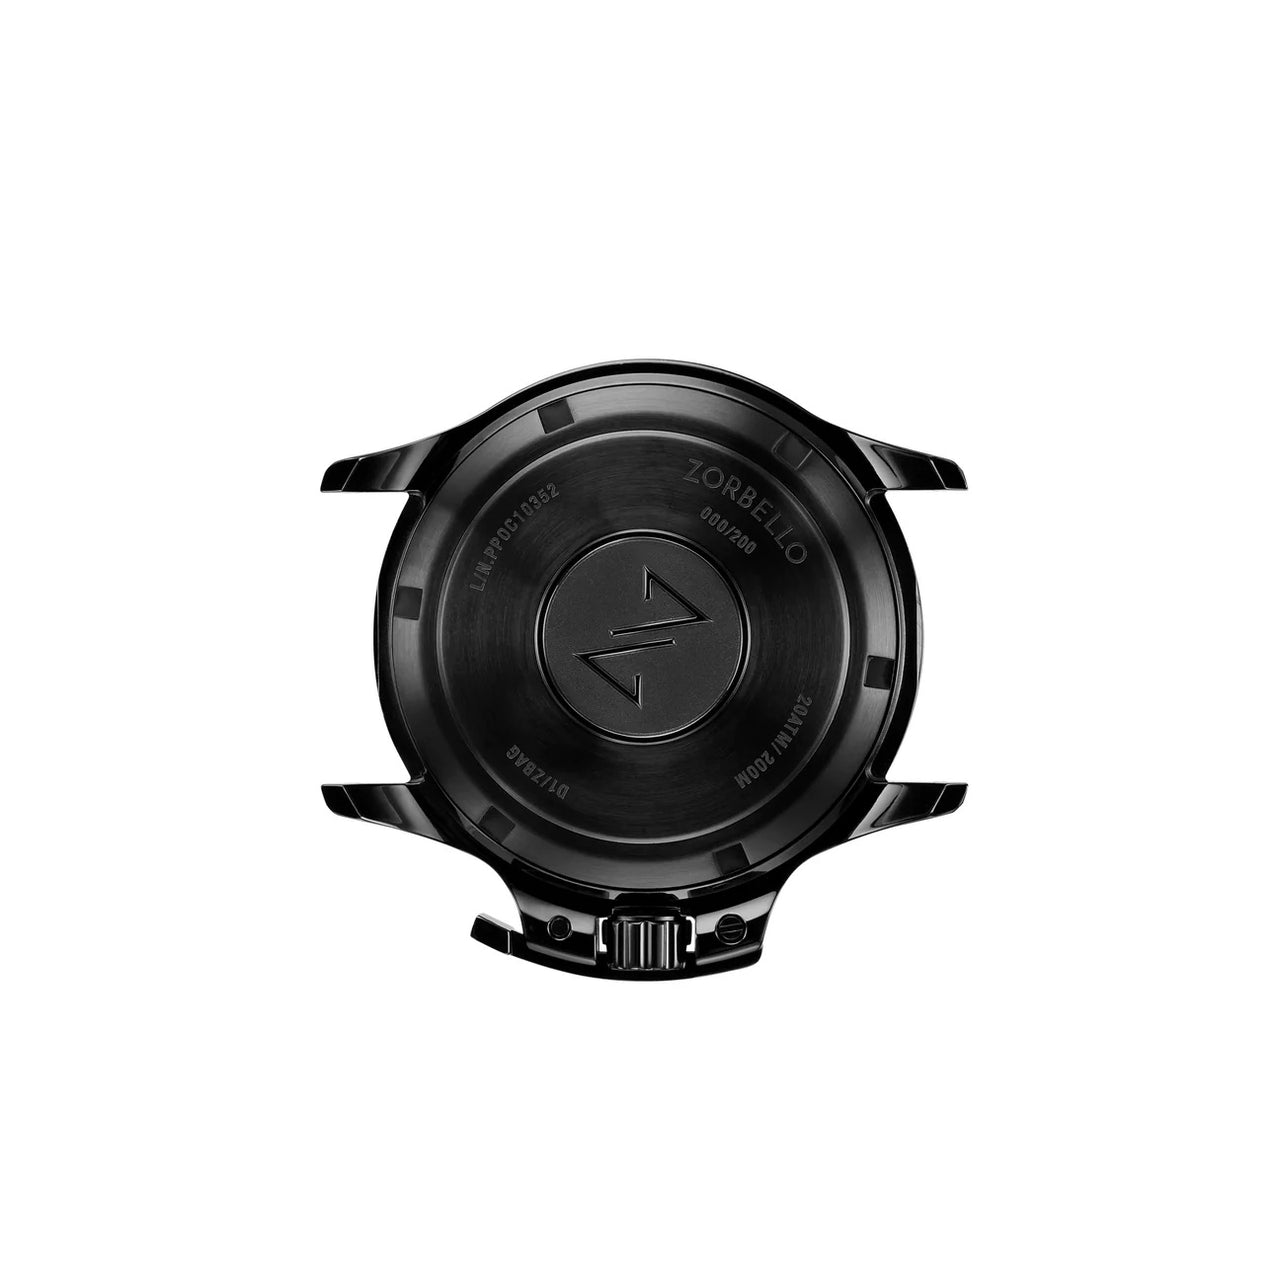 Zorbello D1 Ocean Limited Edition Men's Black Watch ZBAG005